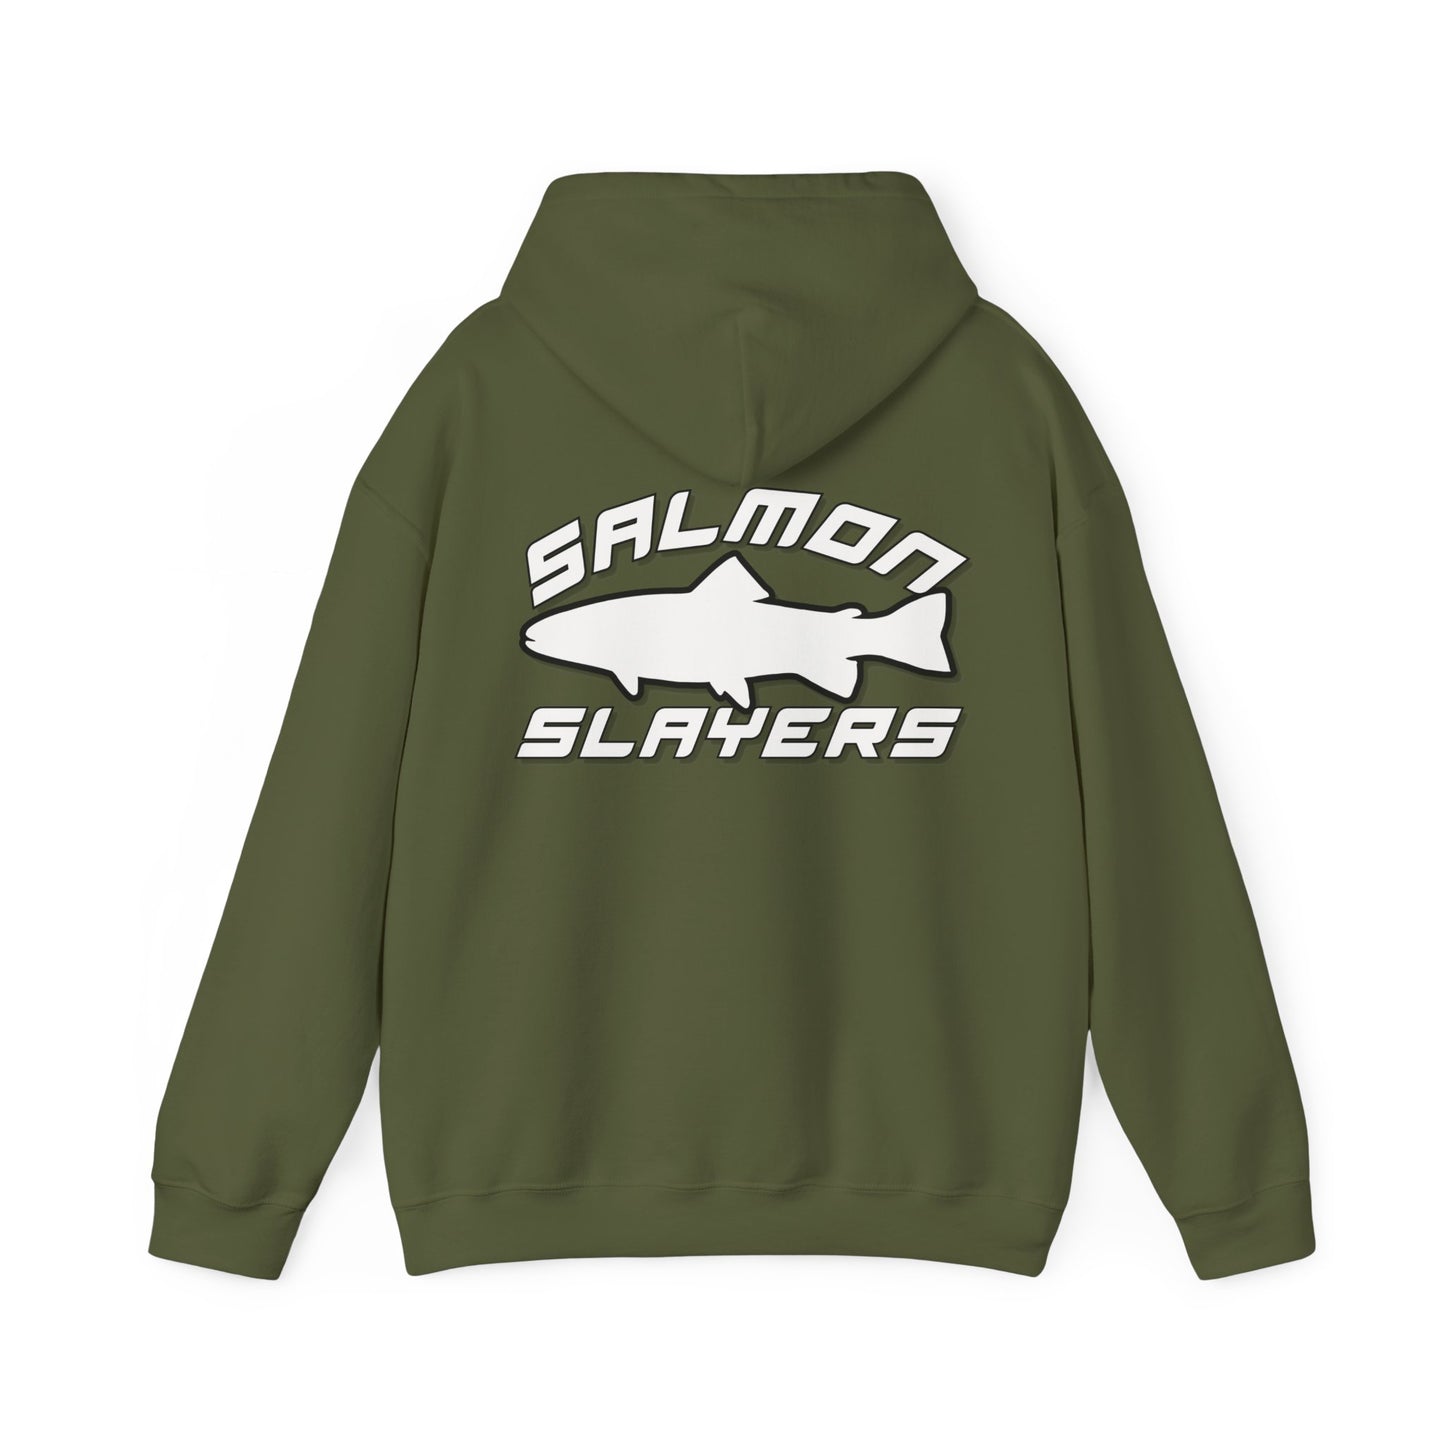 Salmon Slayers - Sport - Cotton/Poly Blend Hoodie